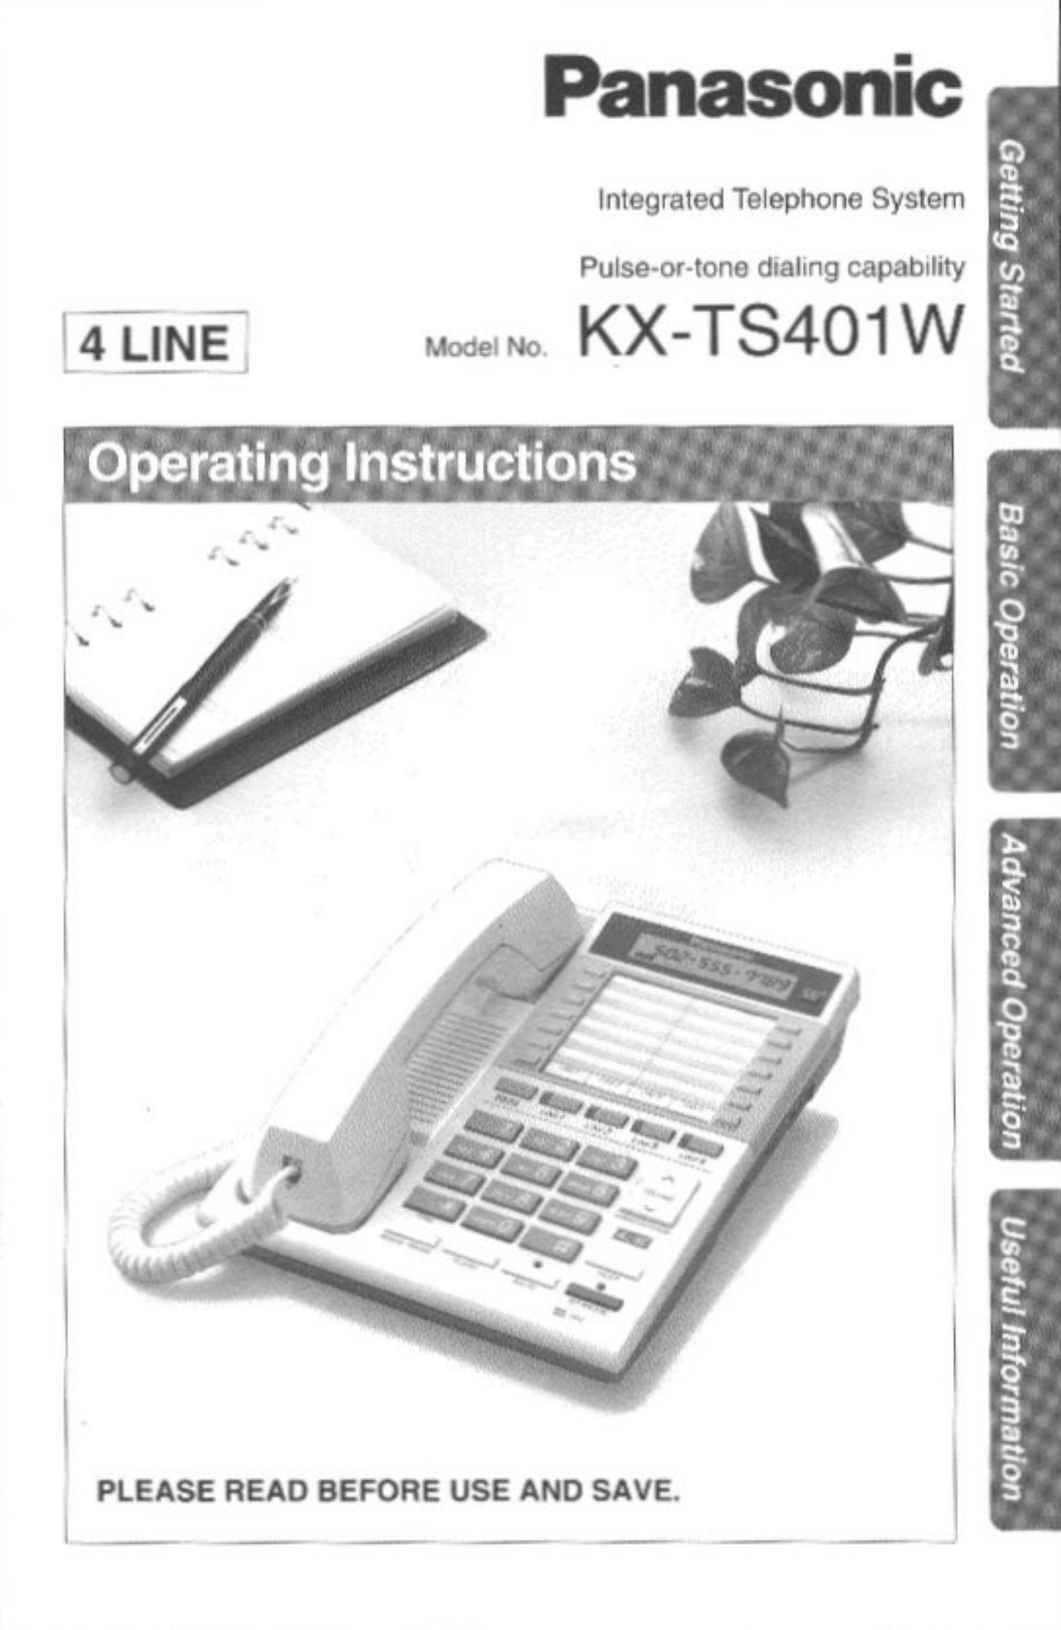 Panasonic KX-TS401W Conference Phone User Manual